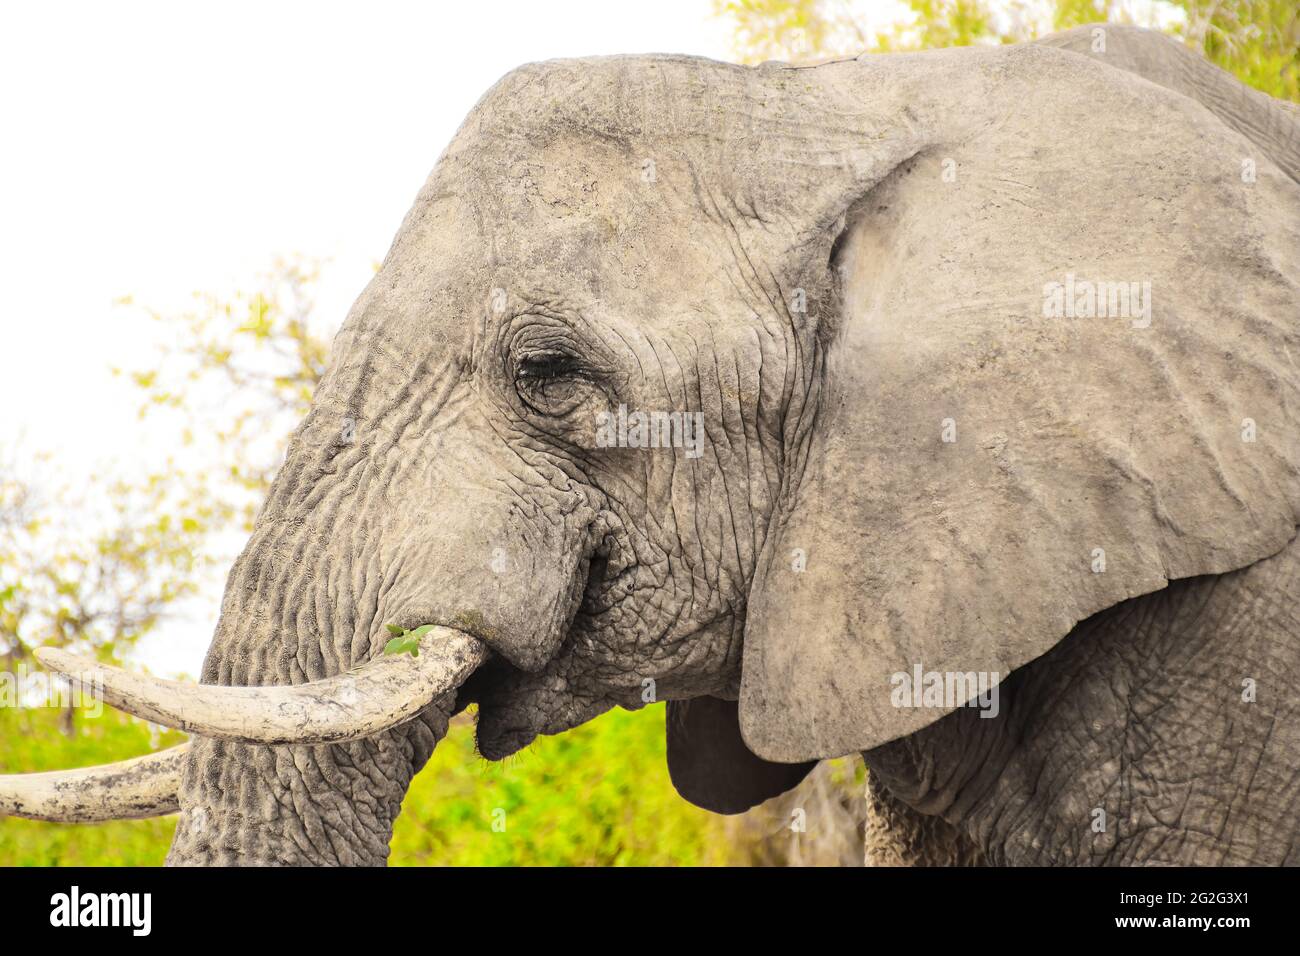 primer plano de un elefante, elefante africano, vida silvestre de áfrica Foto de stock